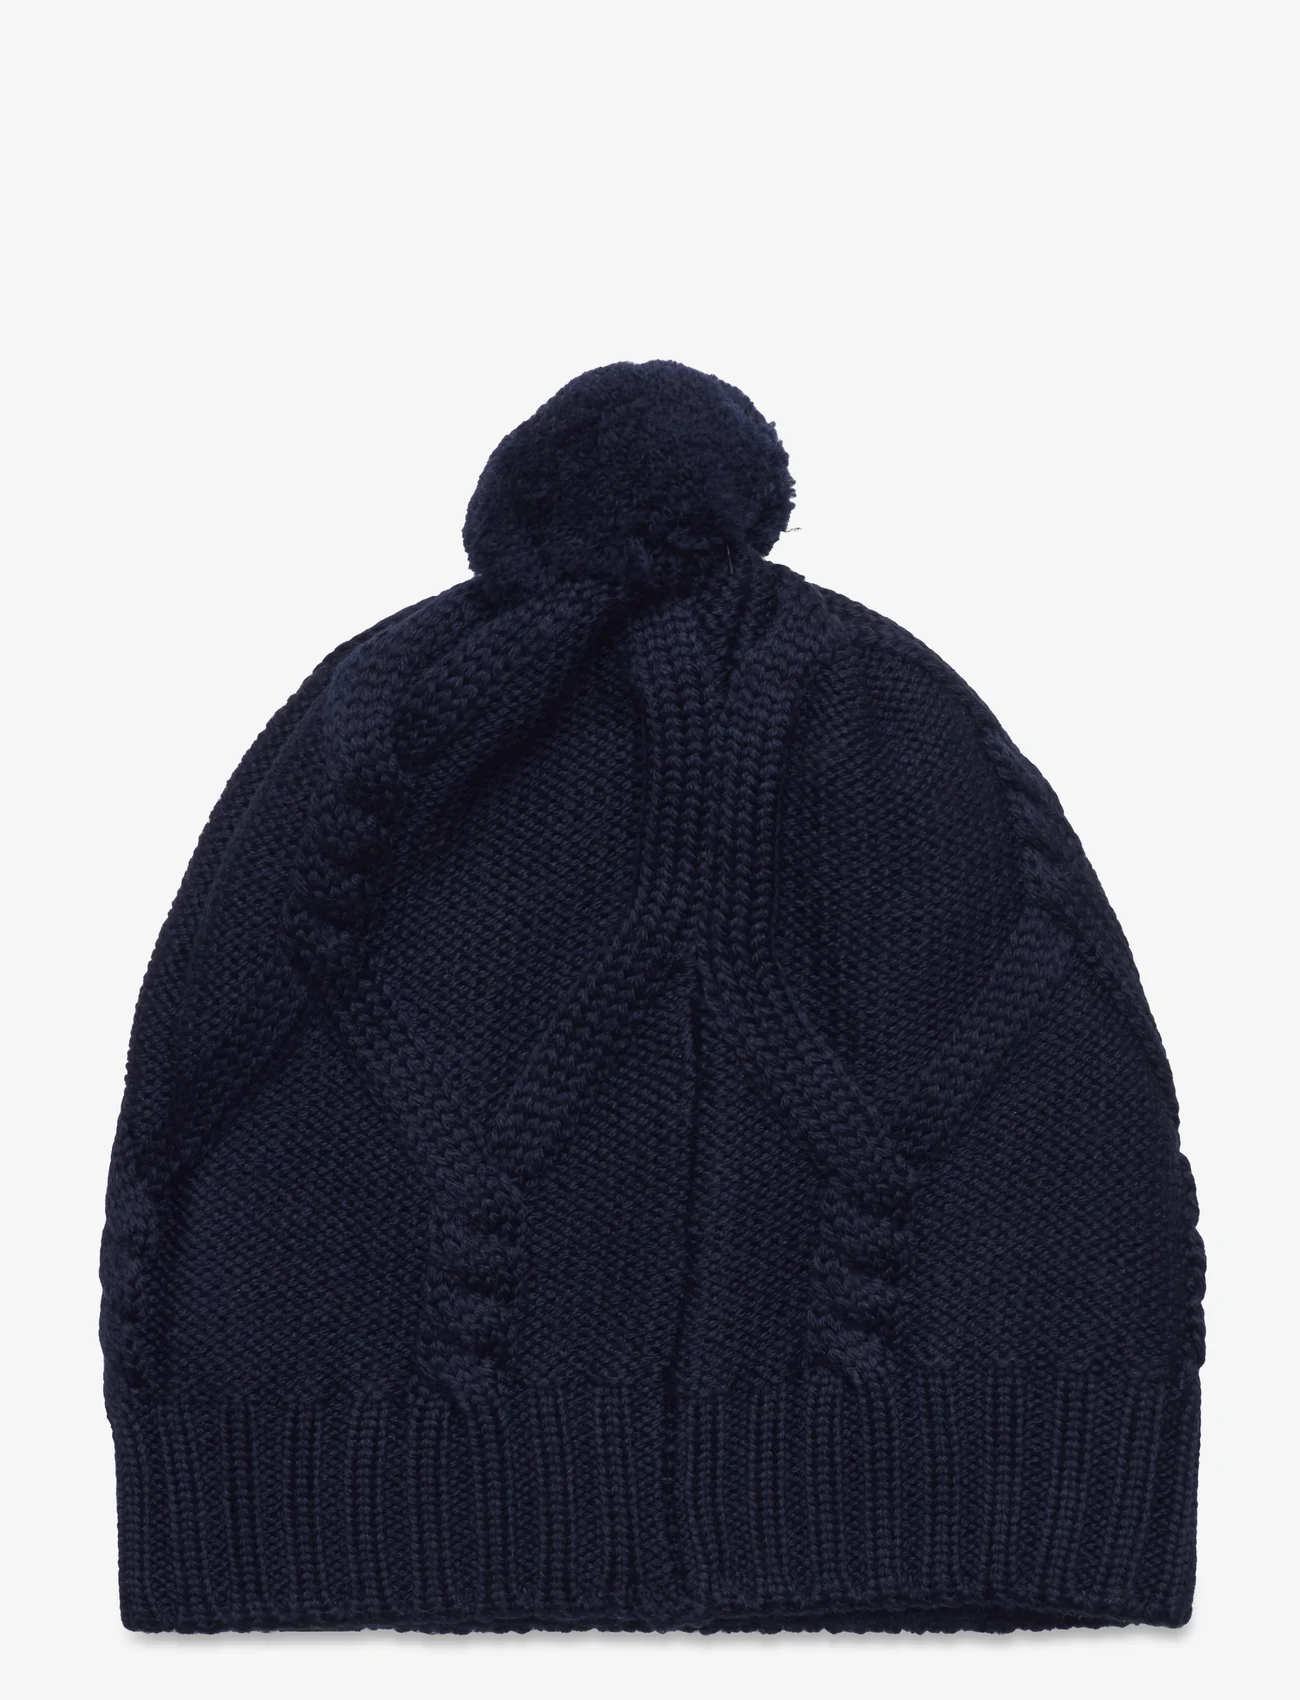 Reima - Beanie, Talvinen - winter hats - navy - 1